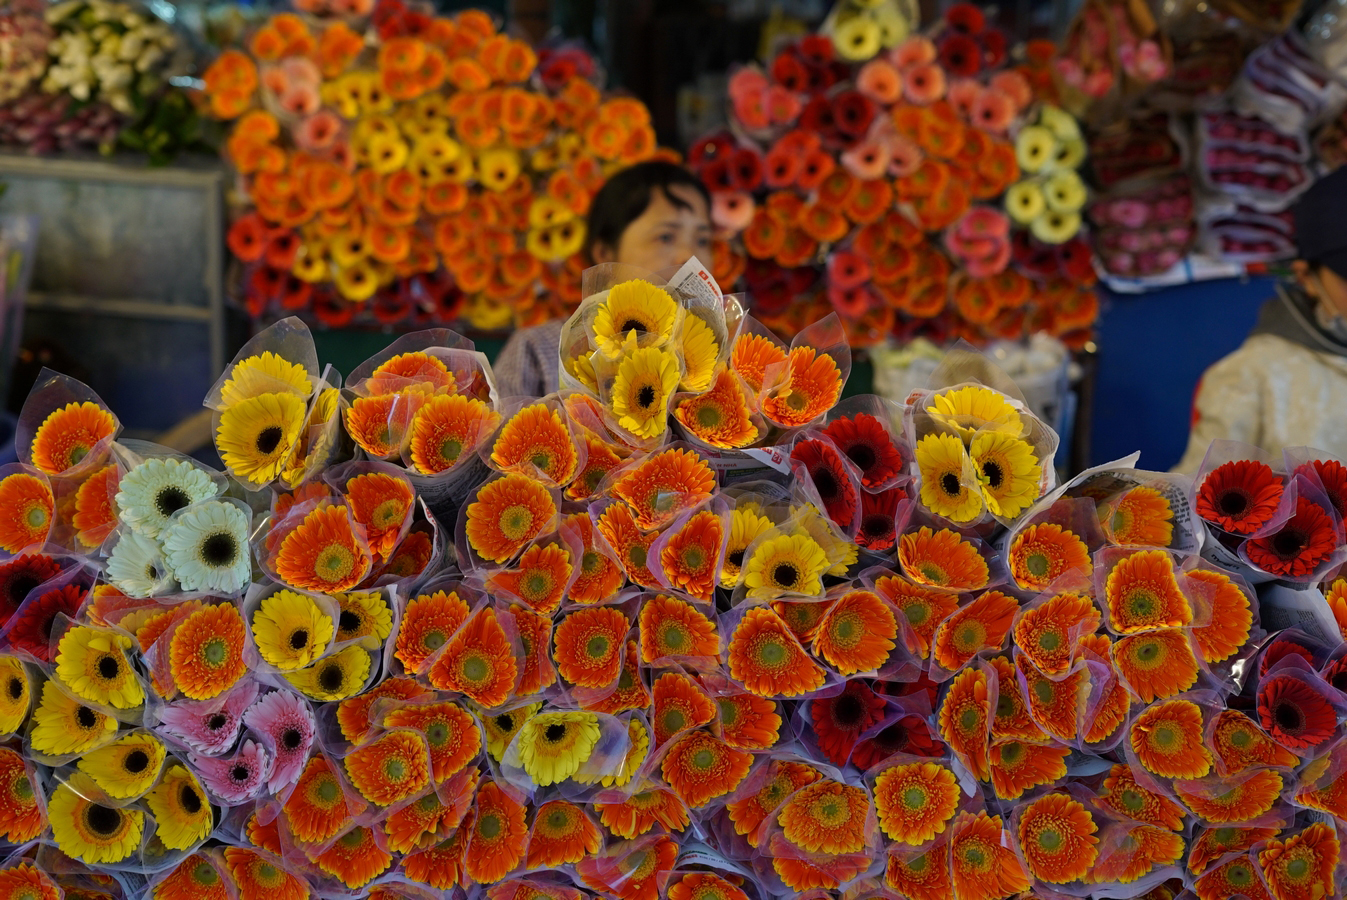 2. Quang Ba Flower Market, Ha Noi